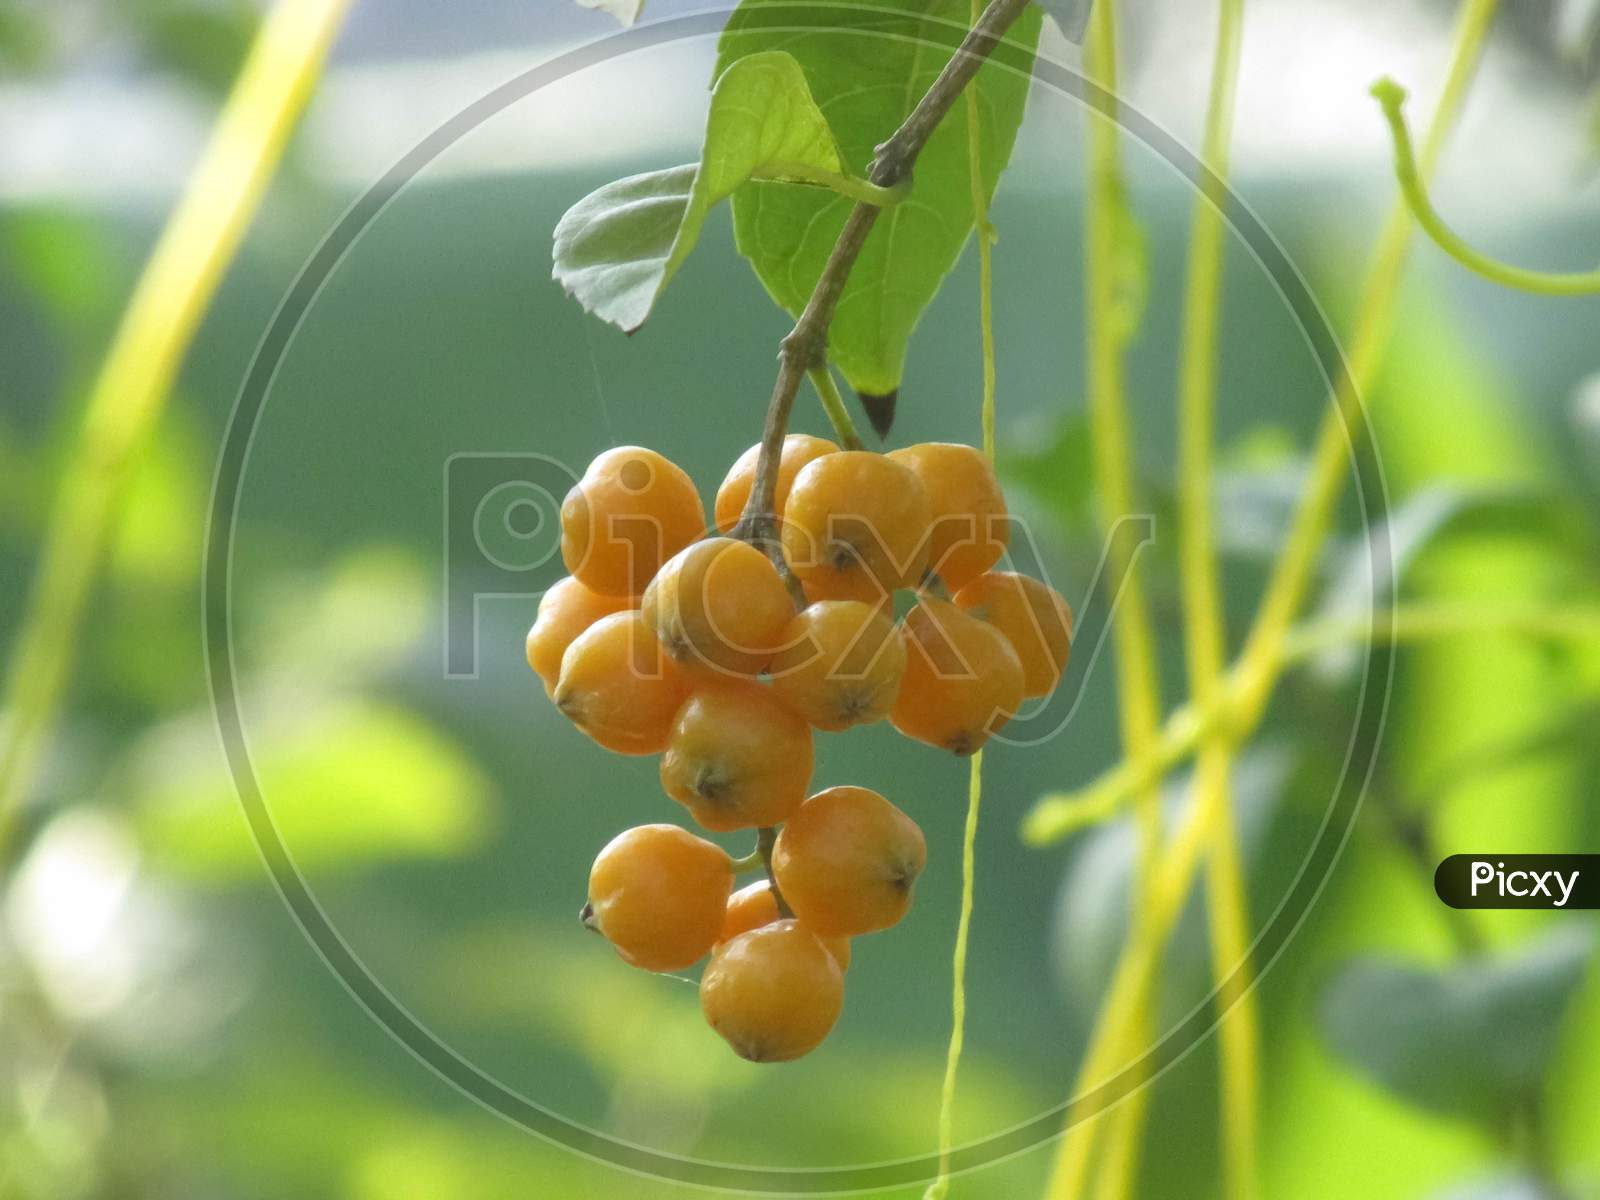 Skyflower Yellow Fruits Of The Duranta Erecta On The Vendor